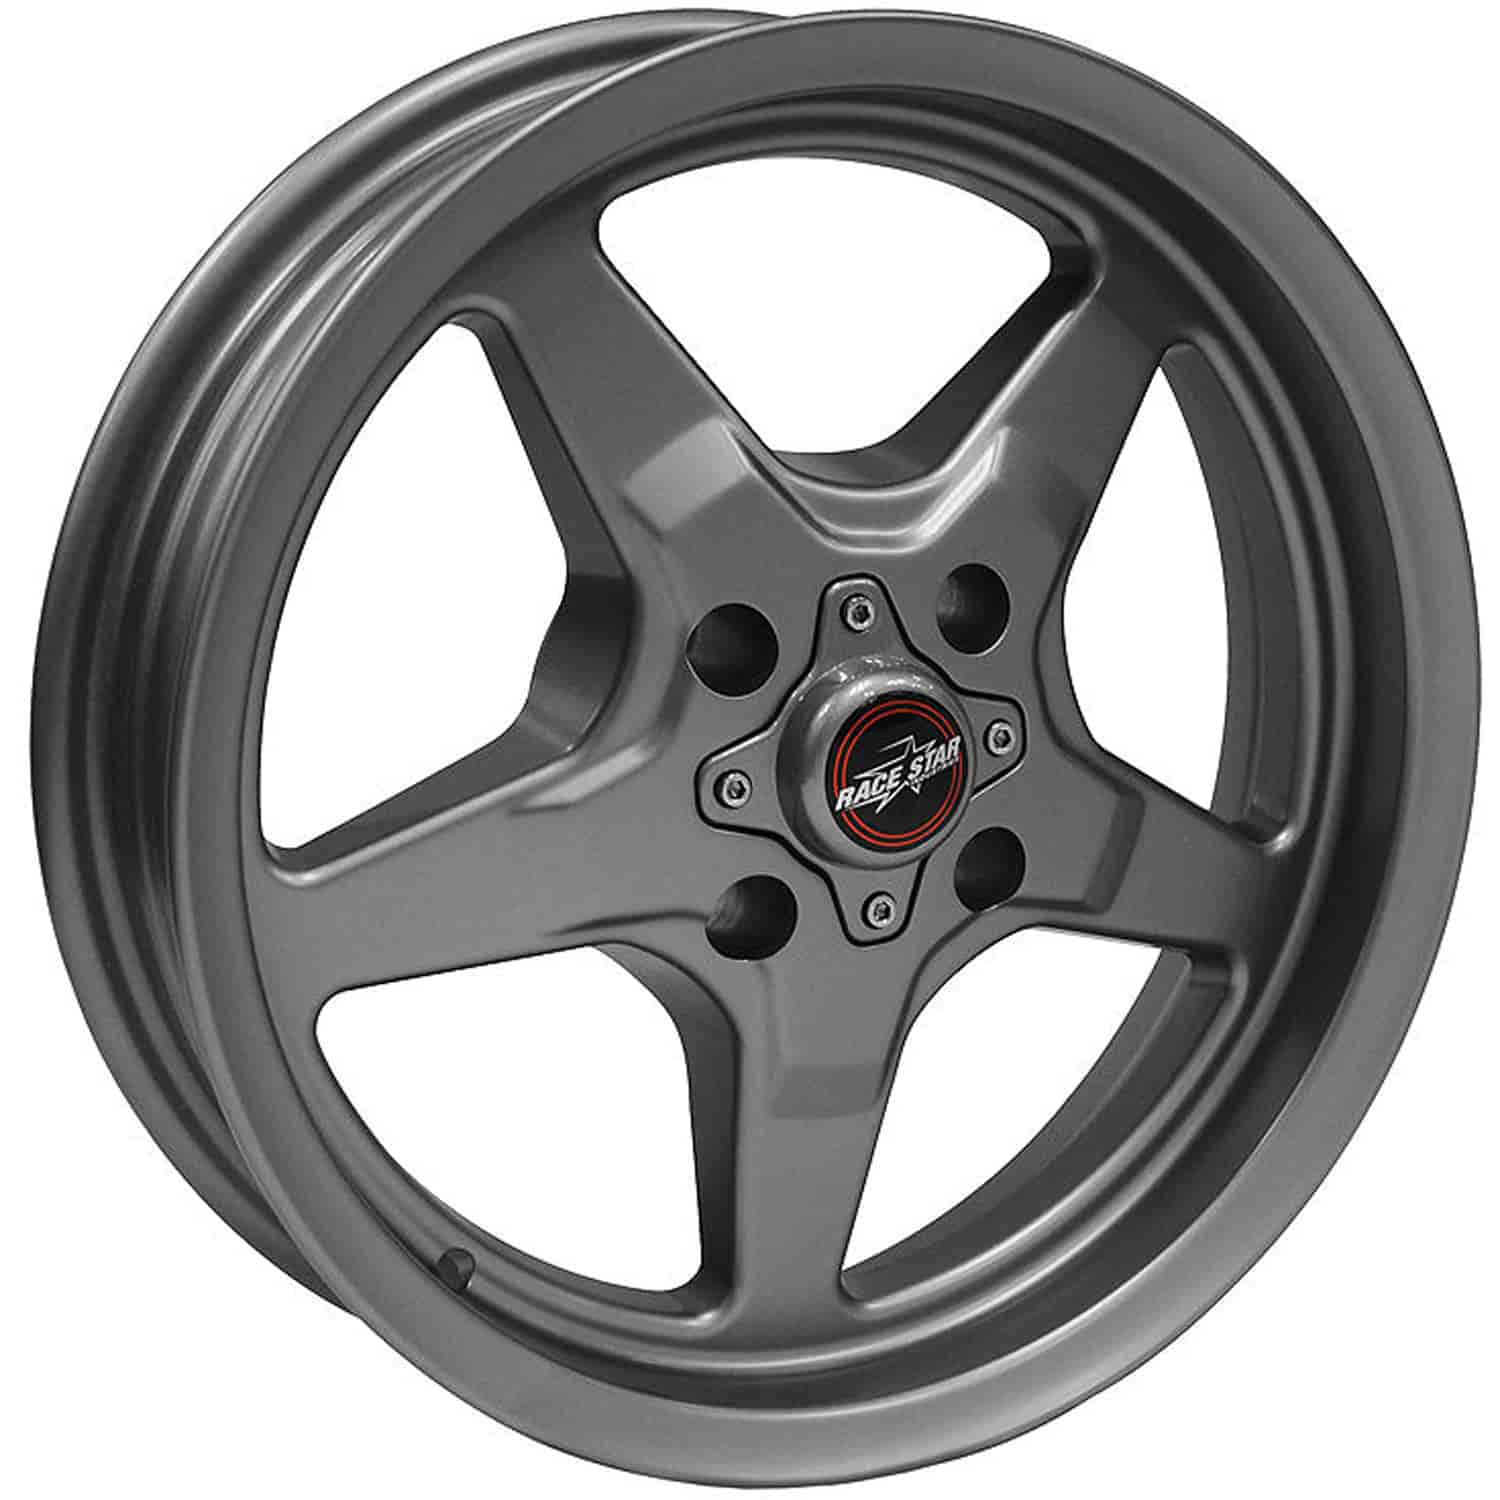 91 Series Drag Star Wheel 15" x 3.75" , 1.5" RS